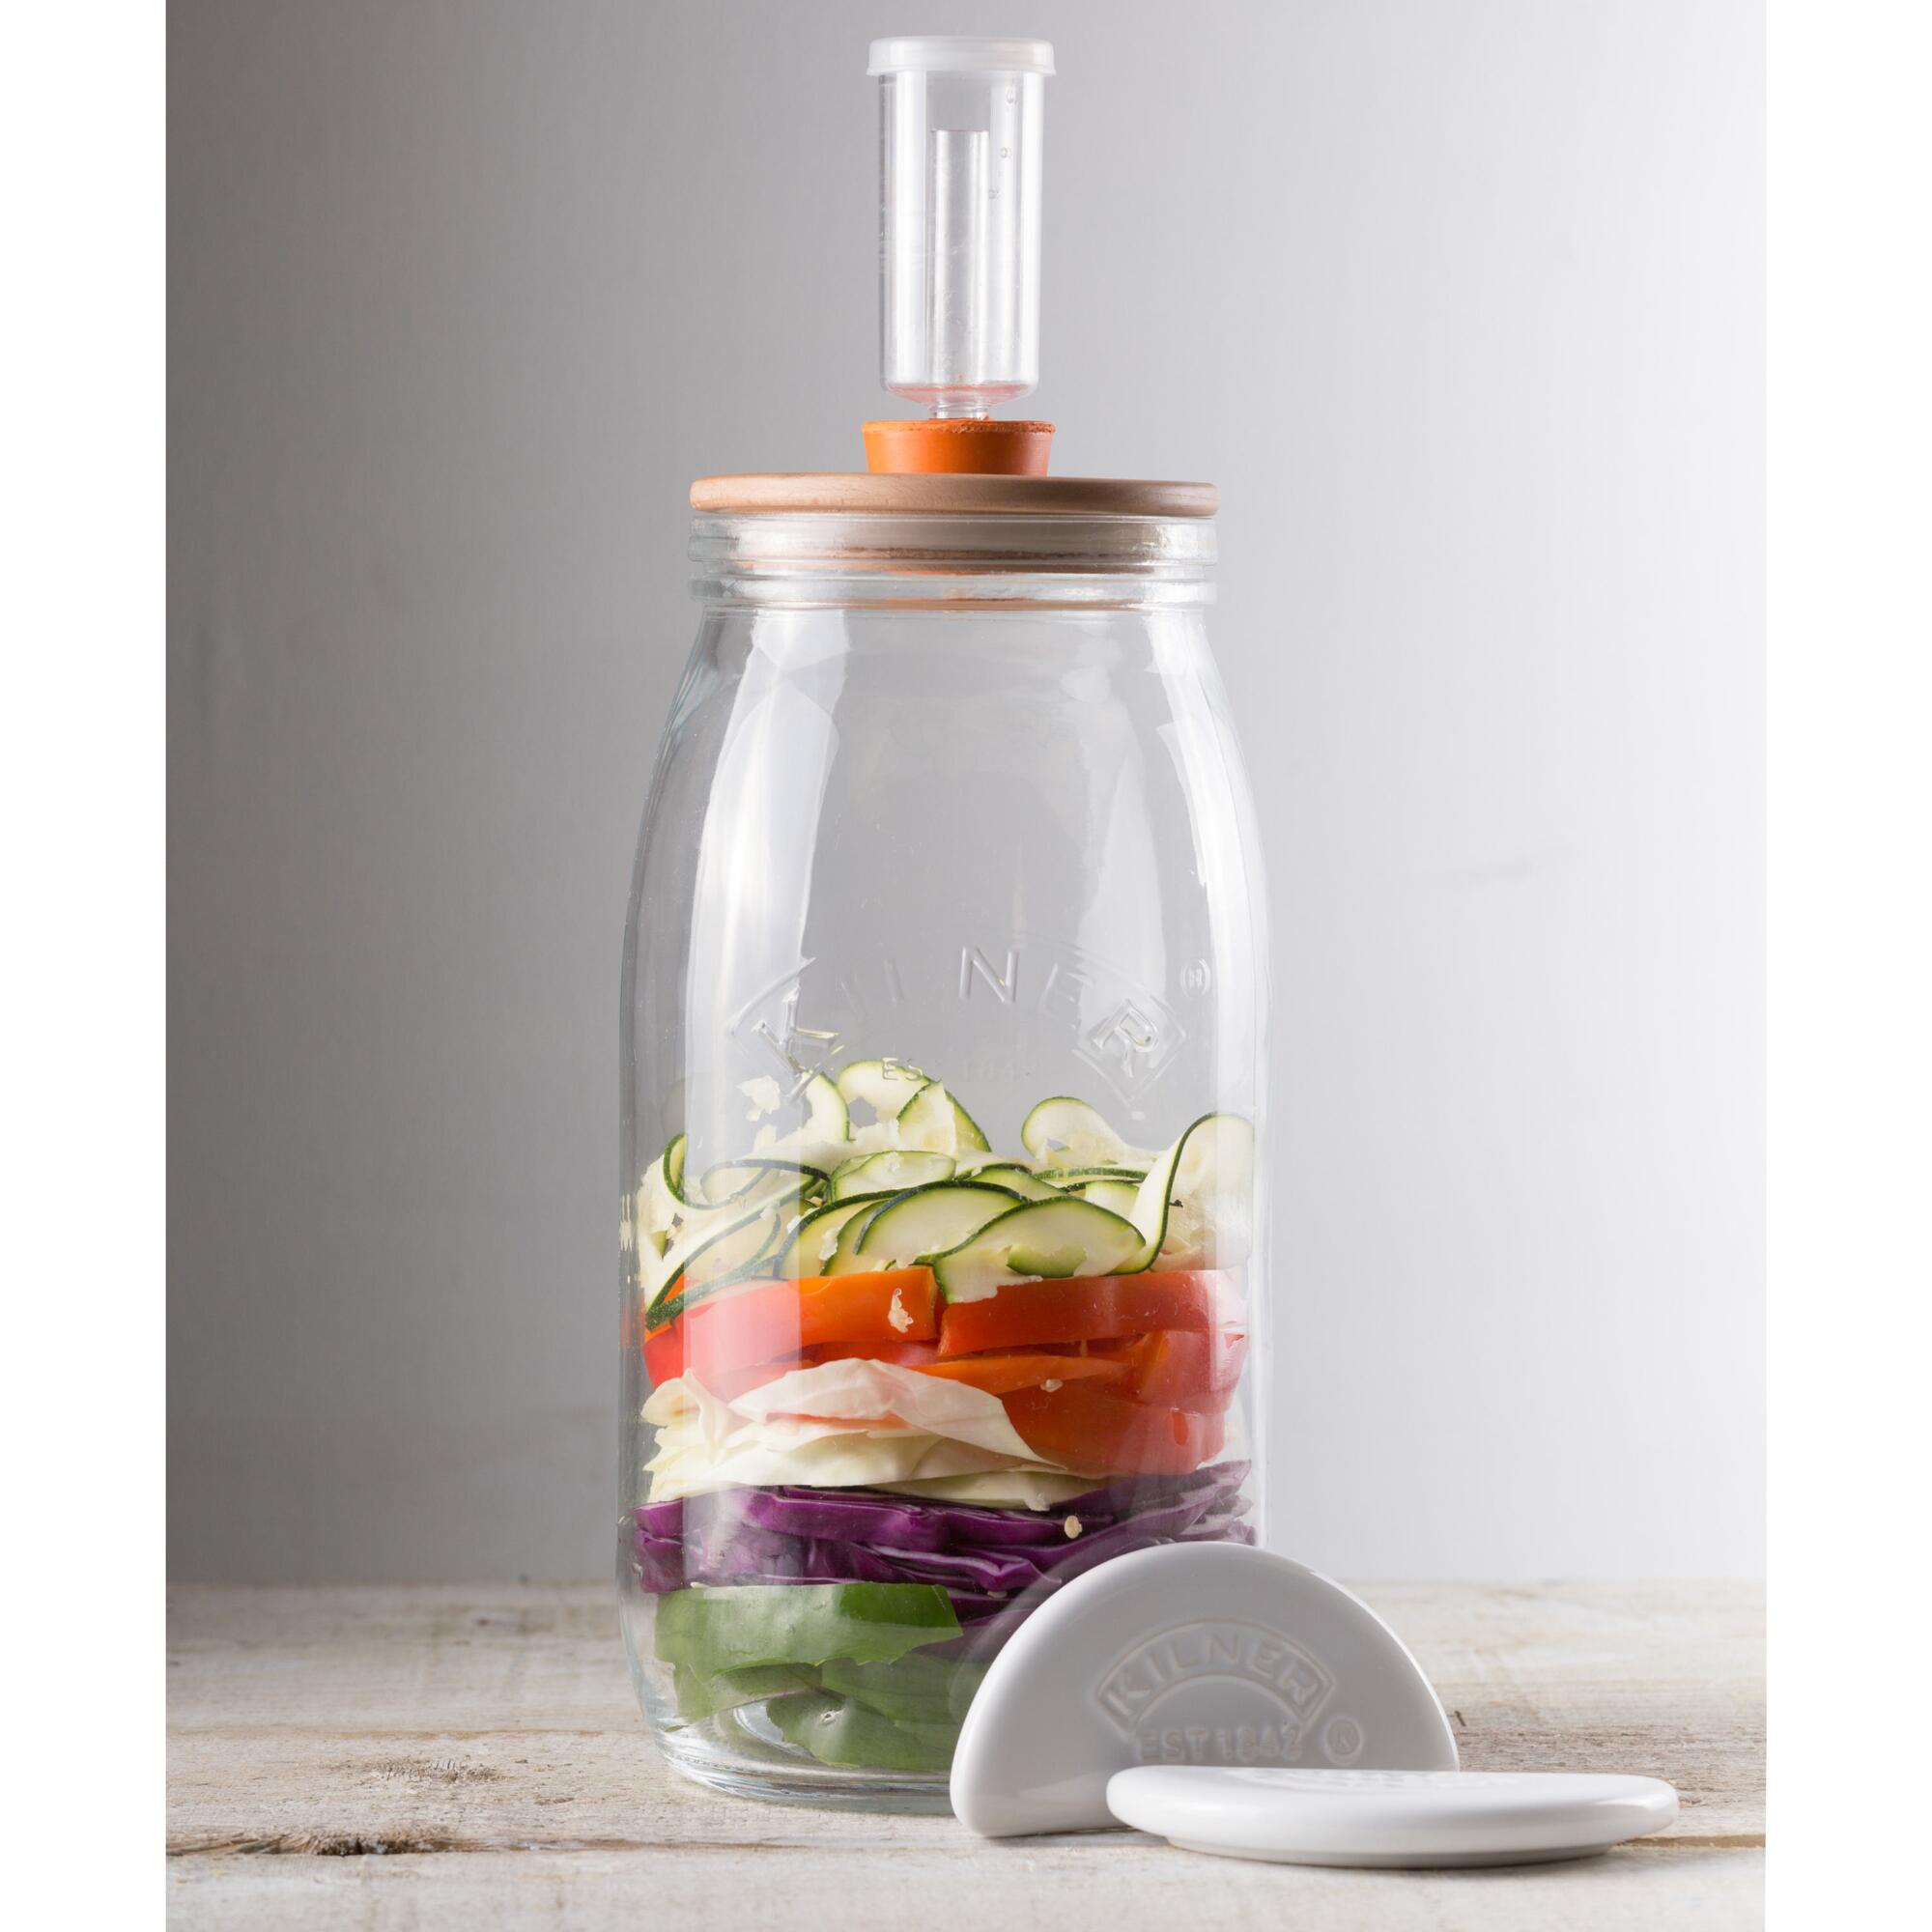 Kilner Glass Jar Fermentation Kit by World Market